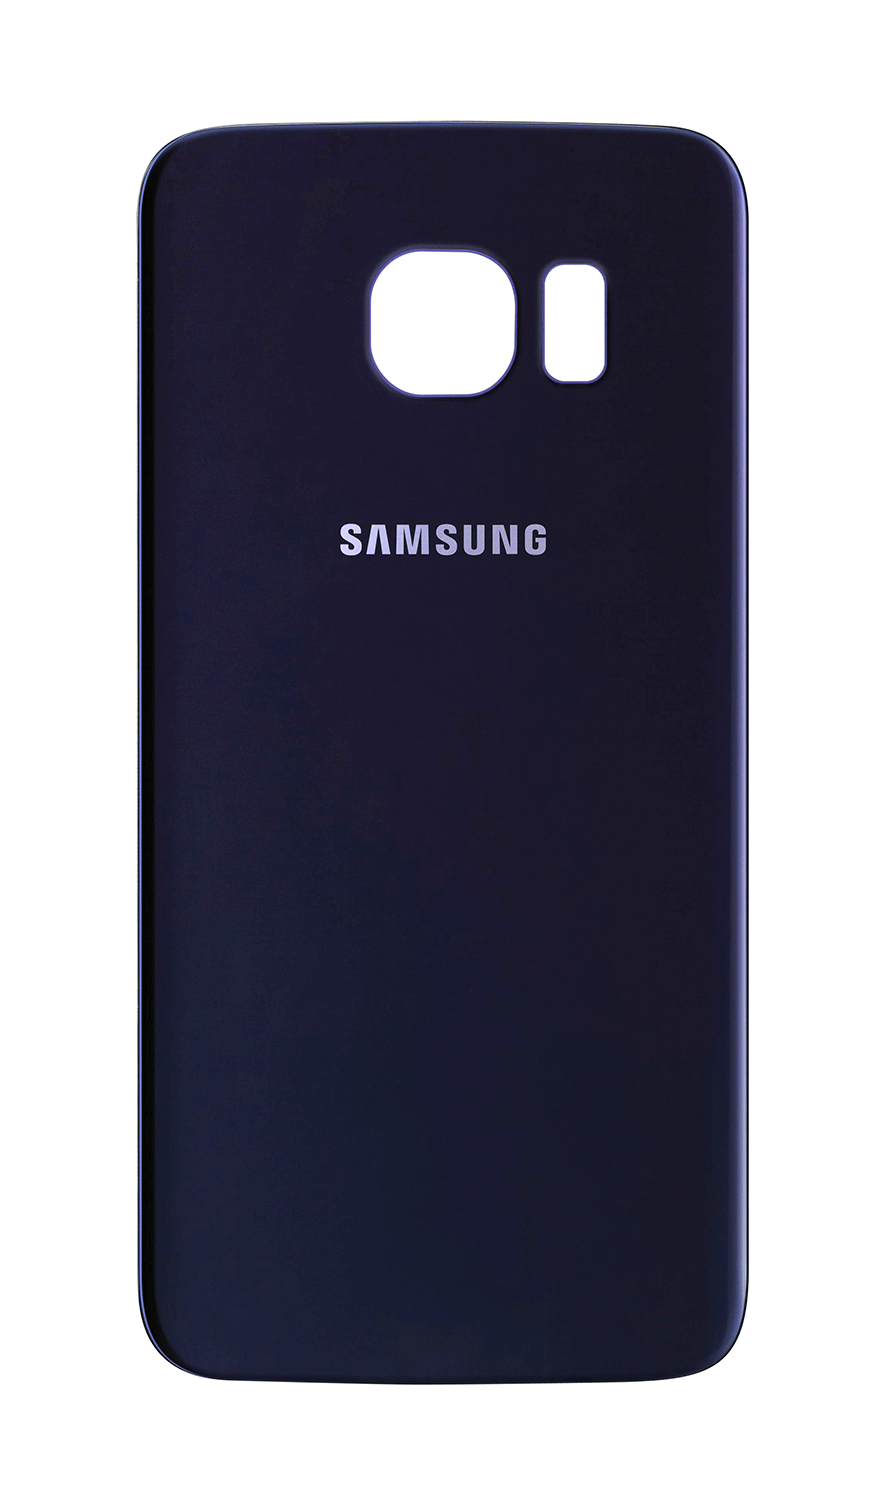 Samsung Galaxy S6 Edge parte trasera